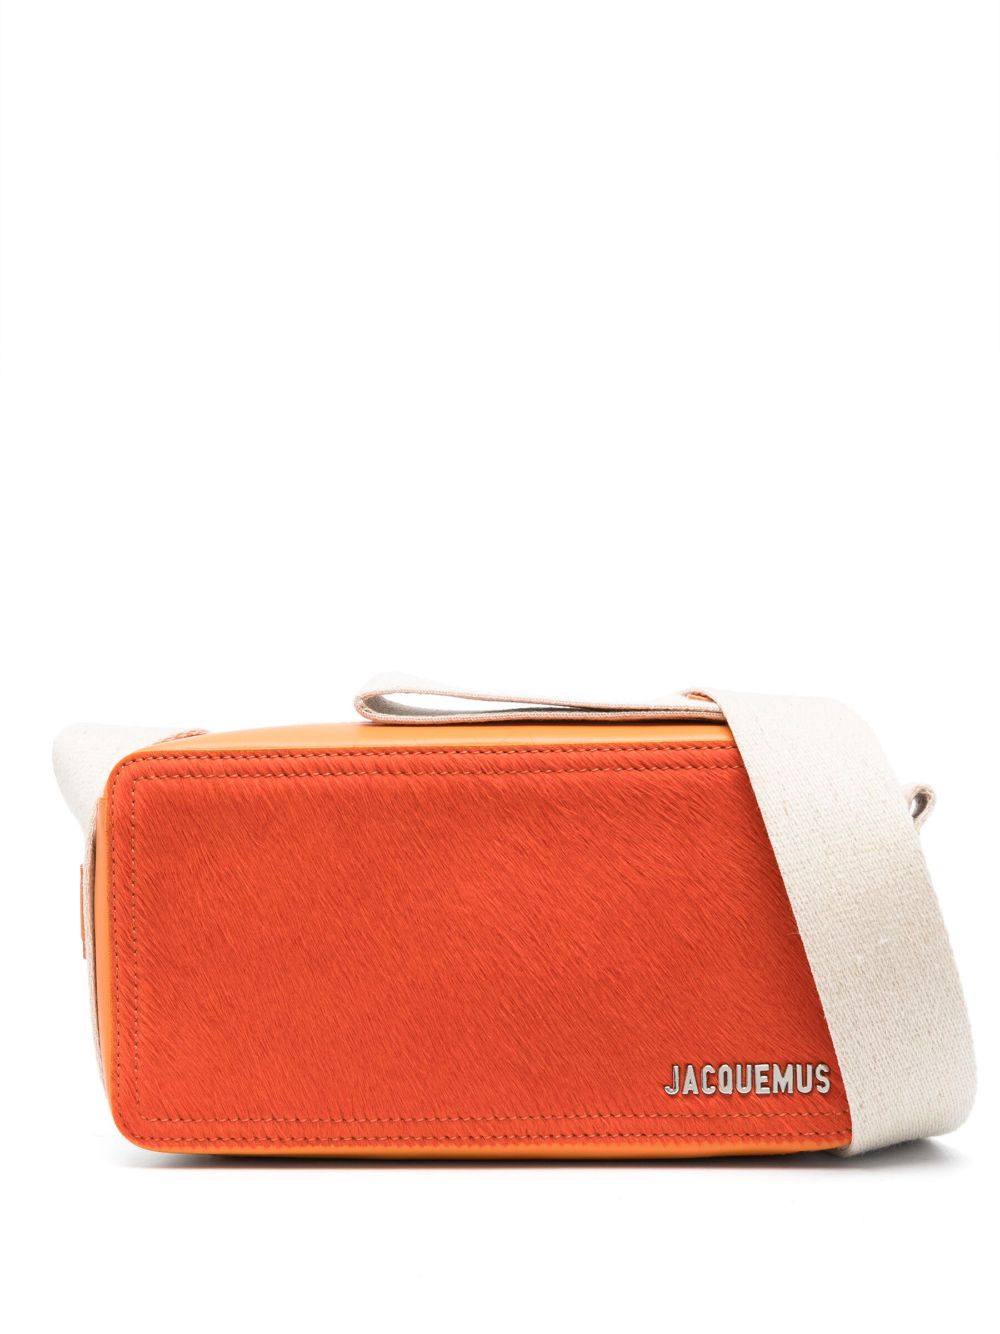 Jacquemus La Cuerda Cross Body Bag In Orange